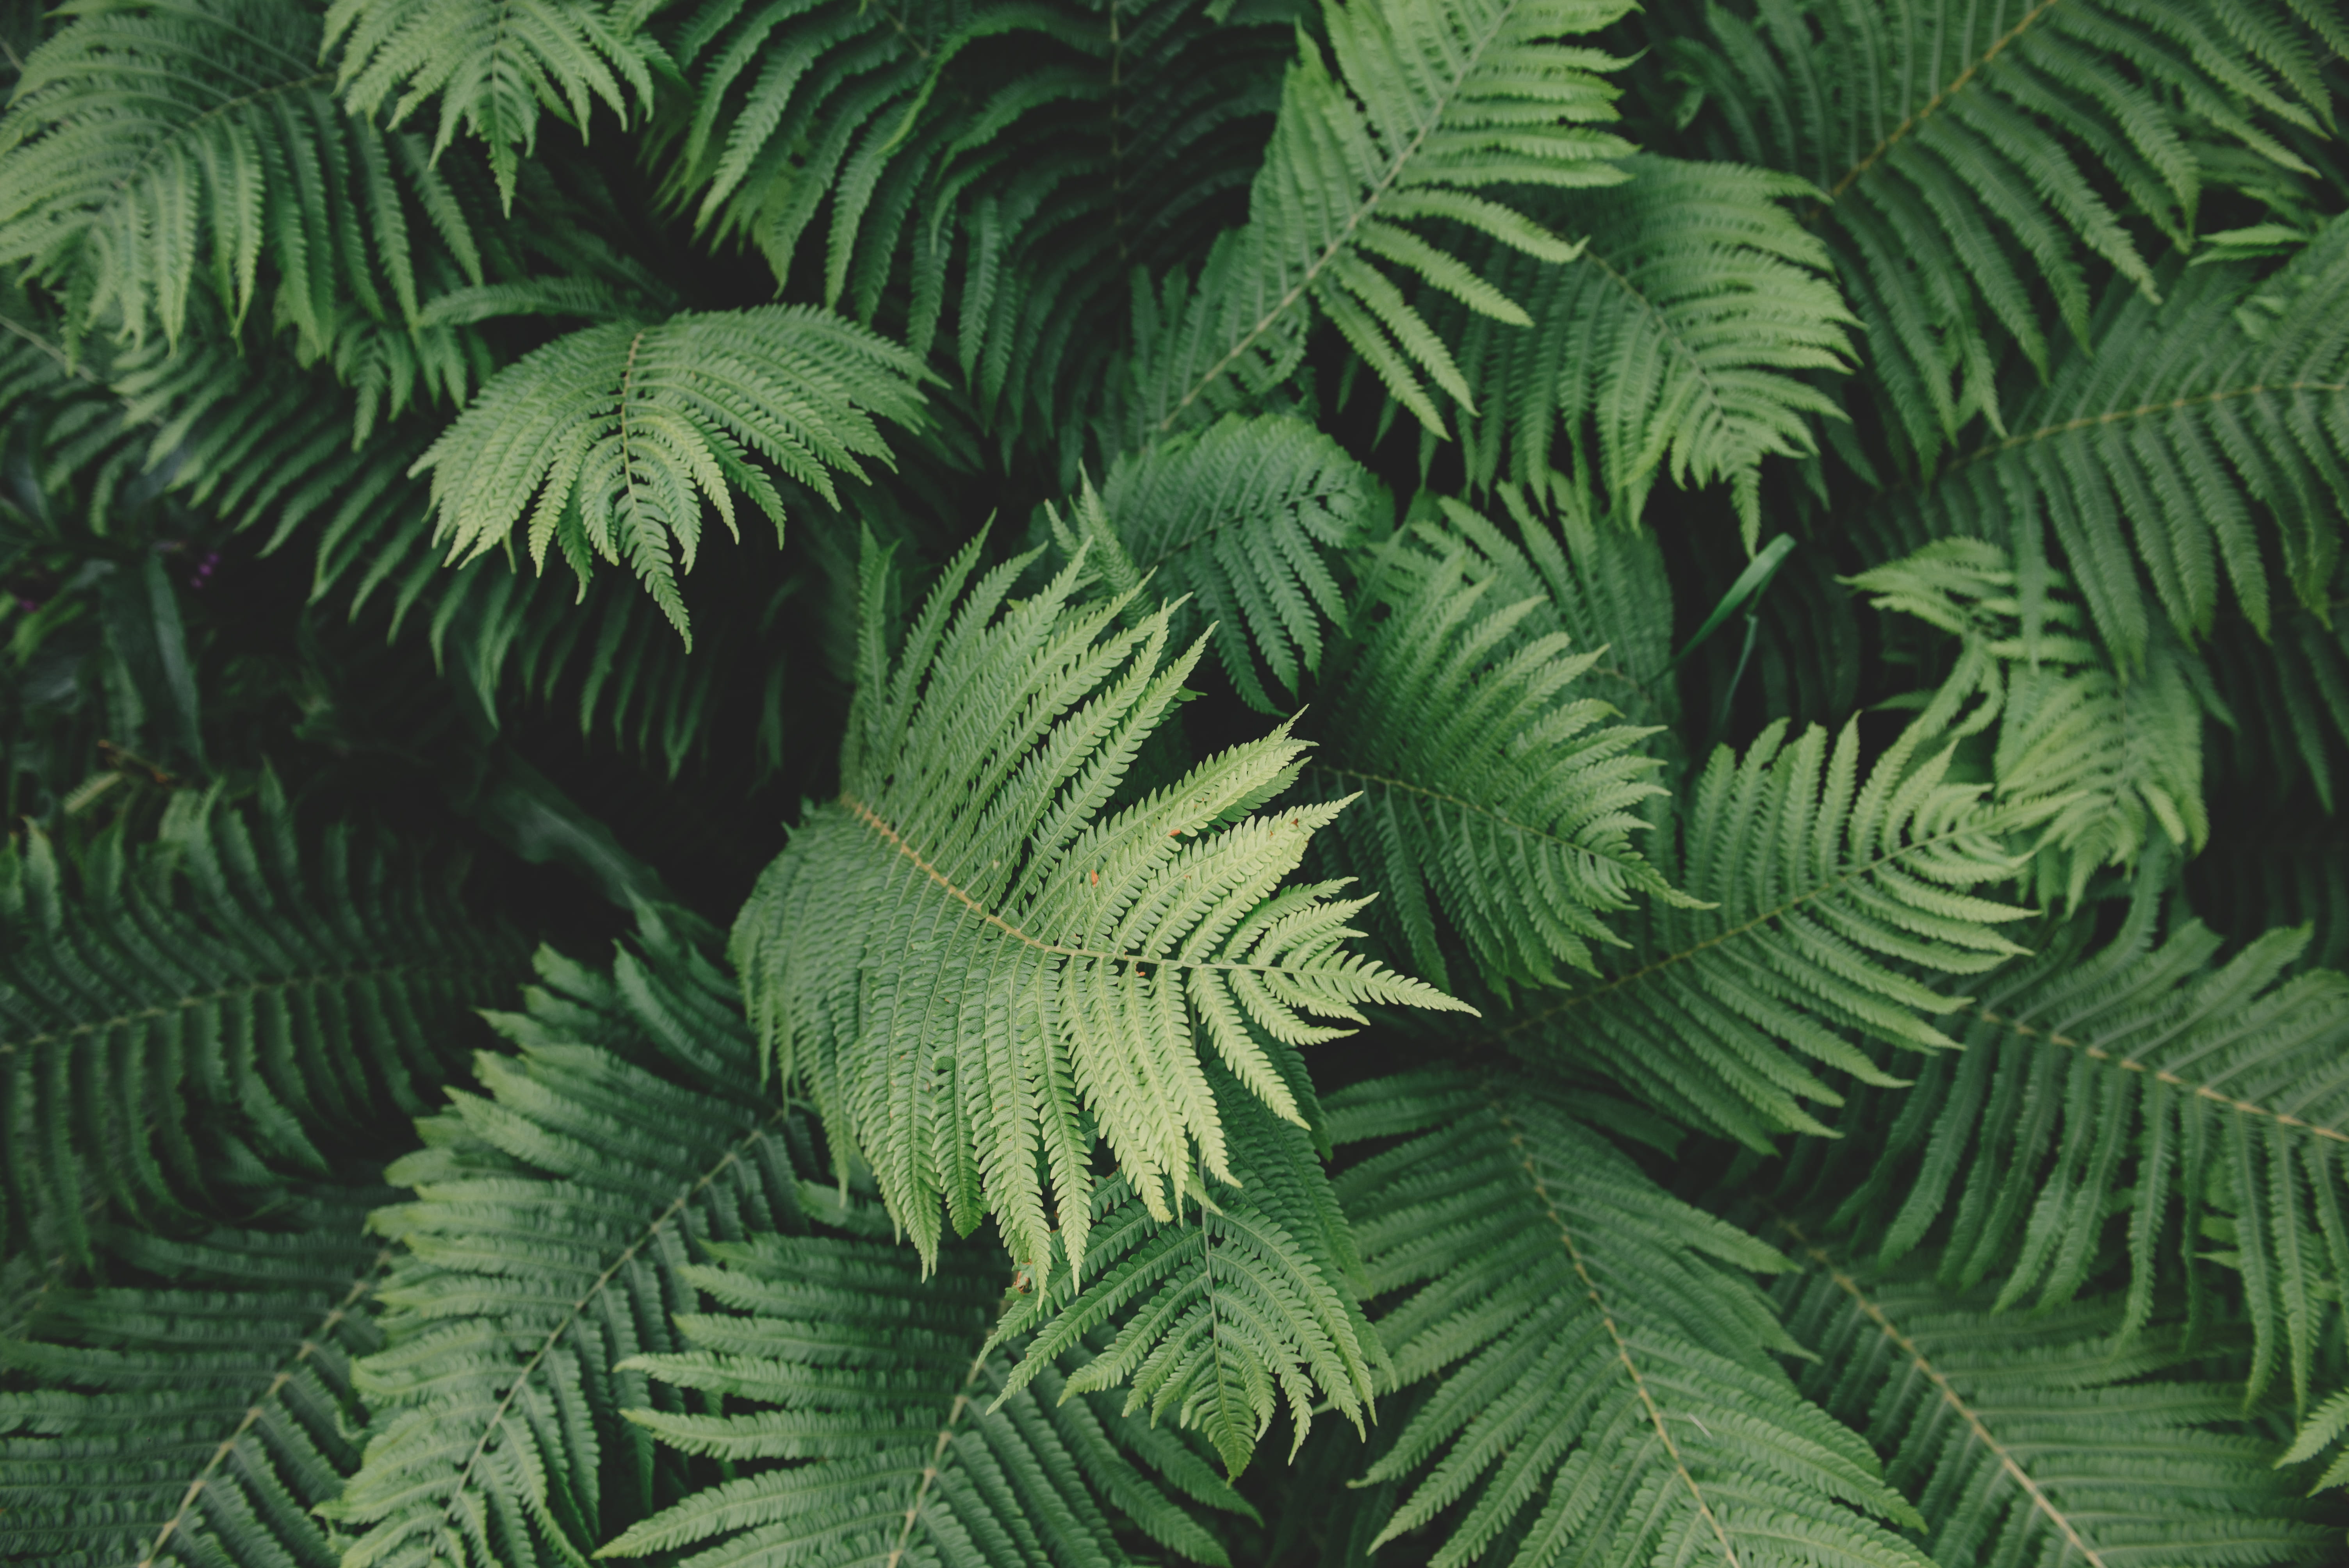 Background image of large fern fronds